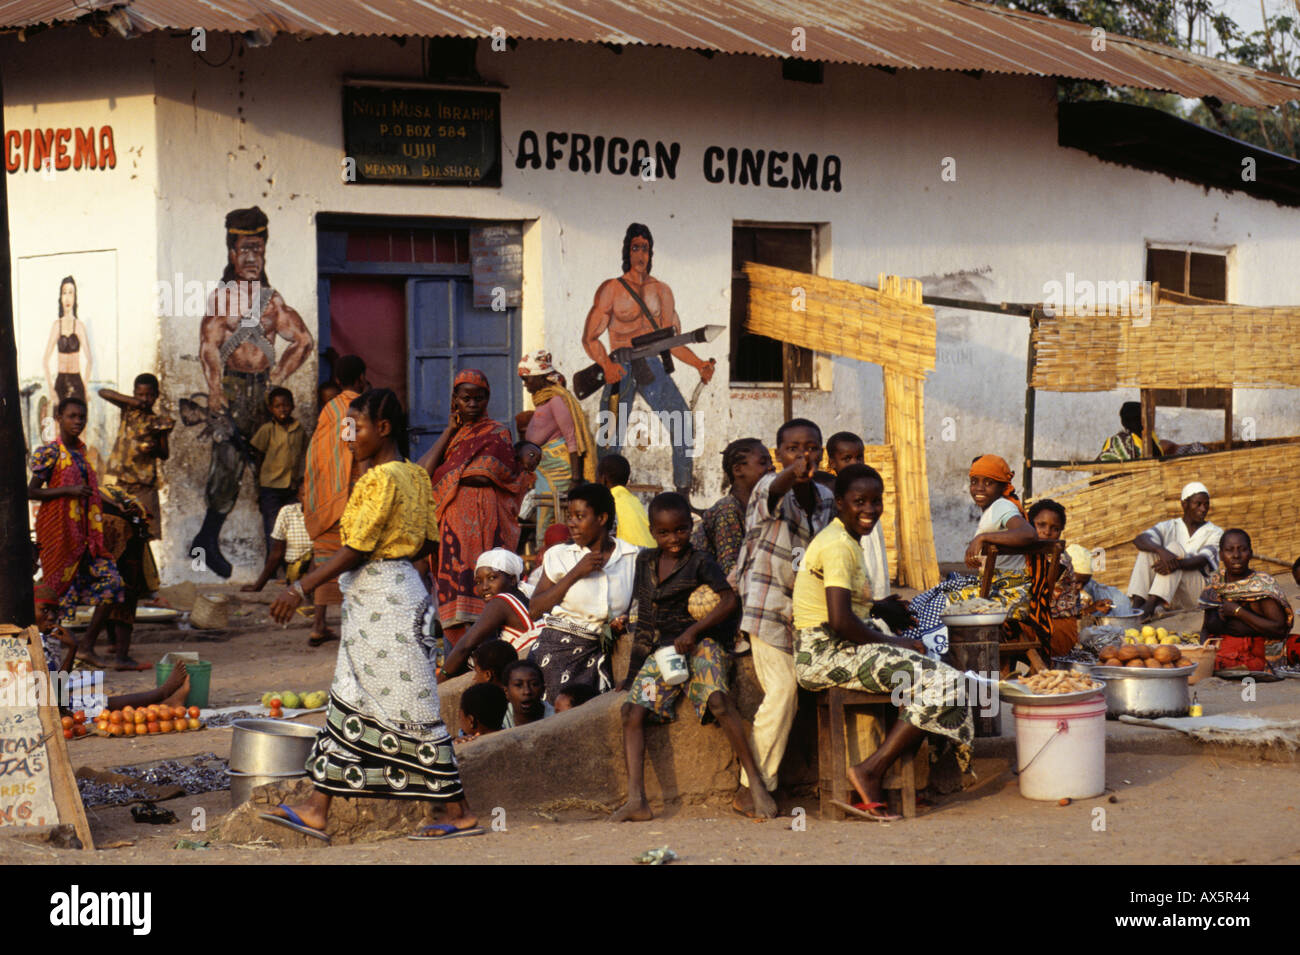 Ujiji, Tanzania. African Cinema with murals of Rambo; food market in front. Stock Photo